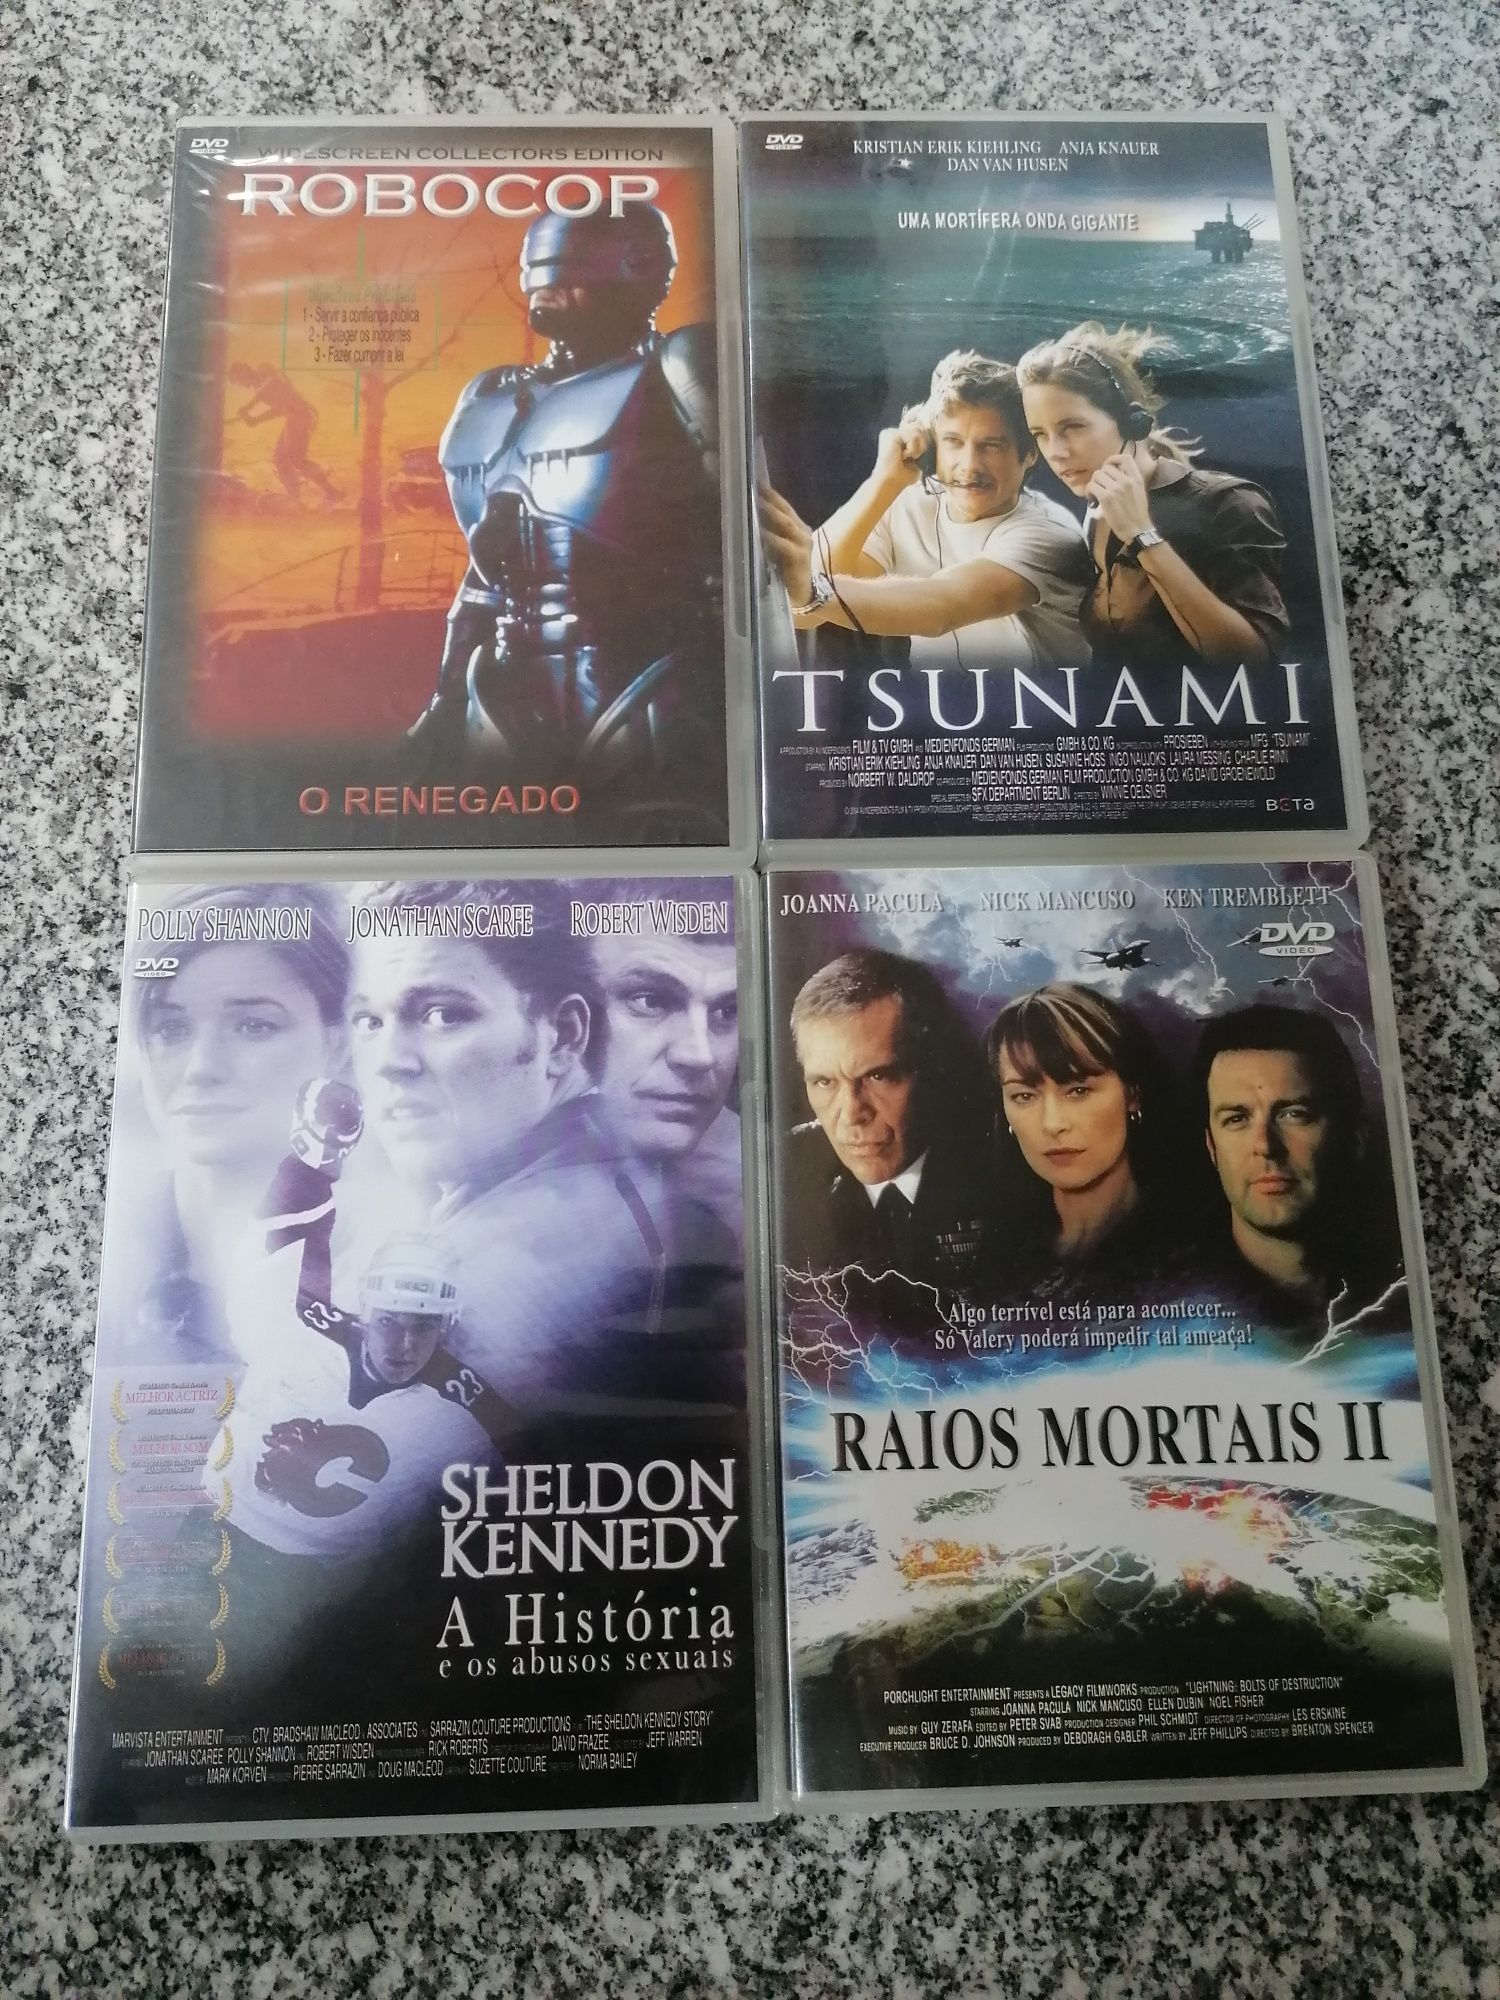 DVD's filmes diversos